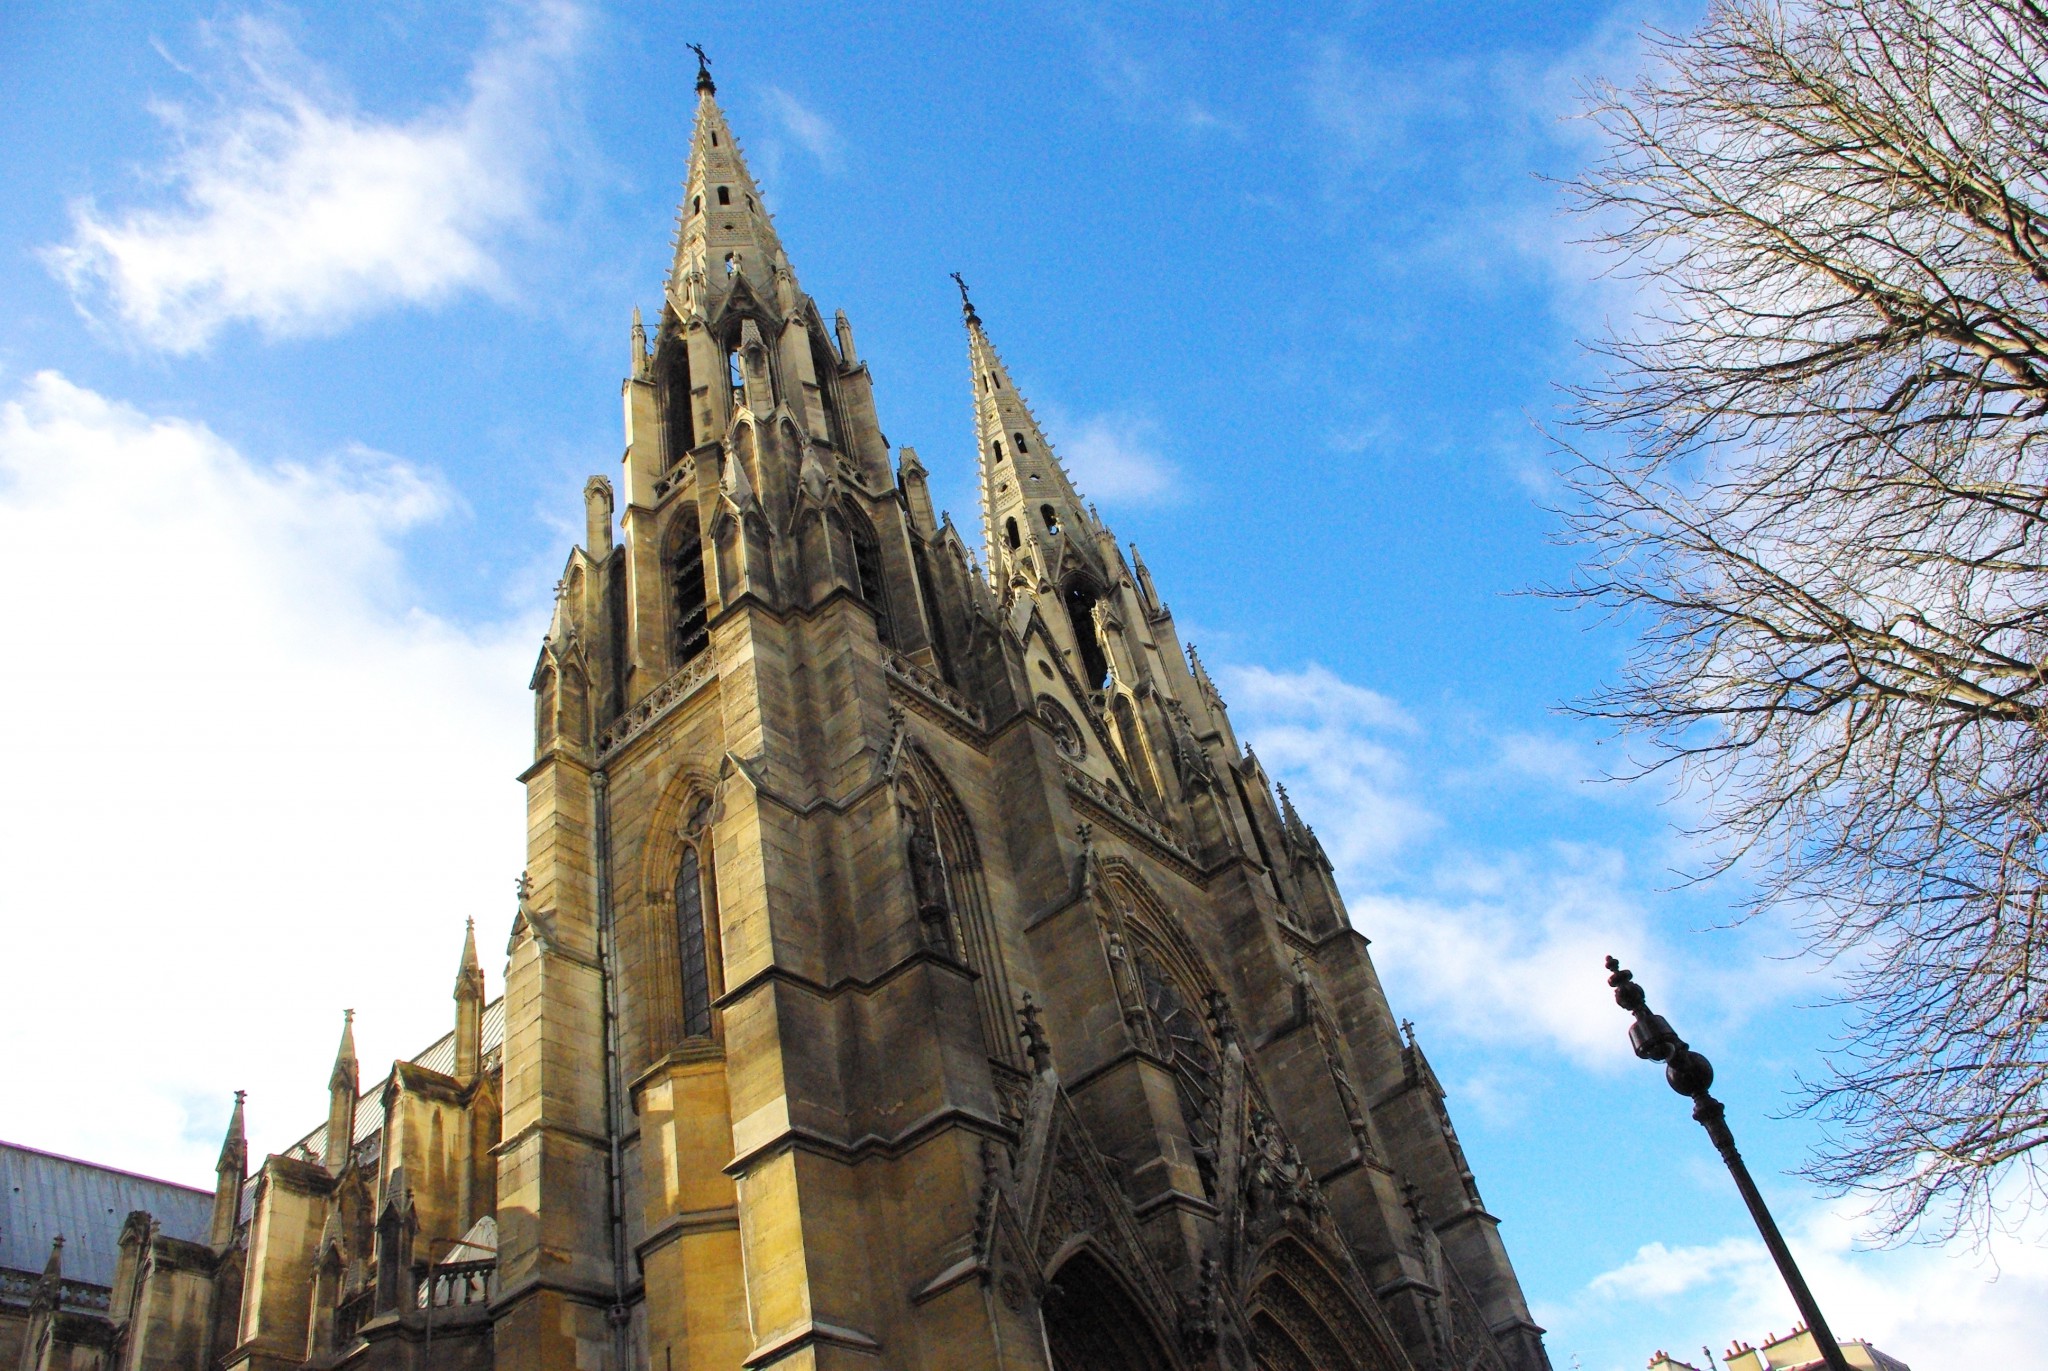 Sainte-Clotilde Basilica, a neo-Gothic church in Paris - French Moments